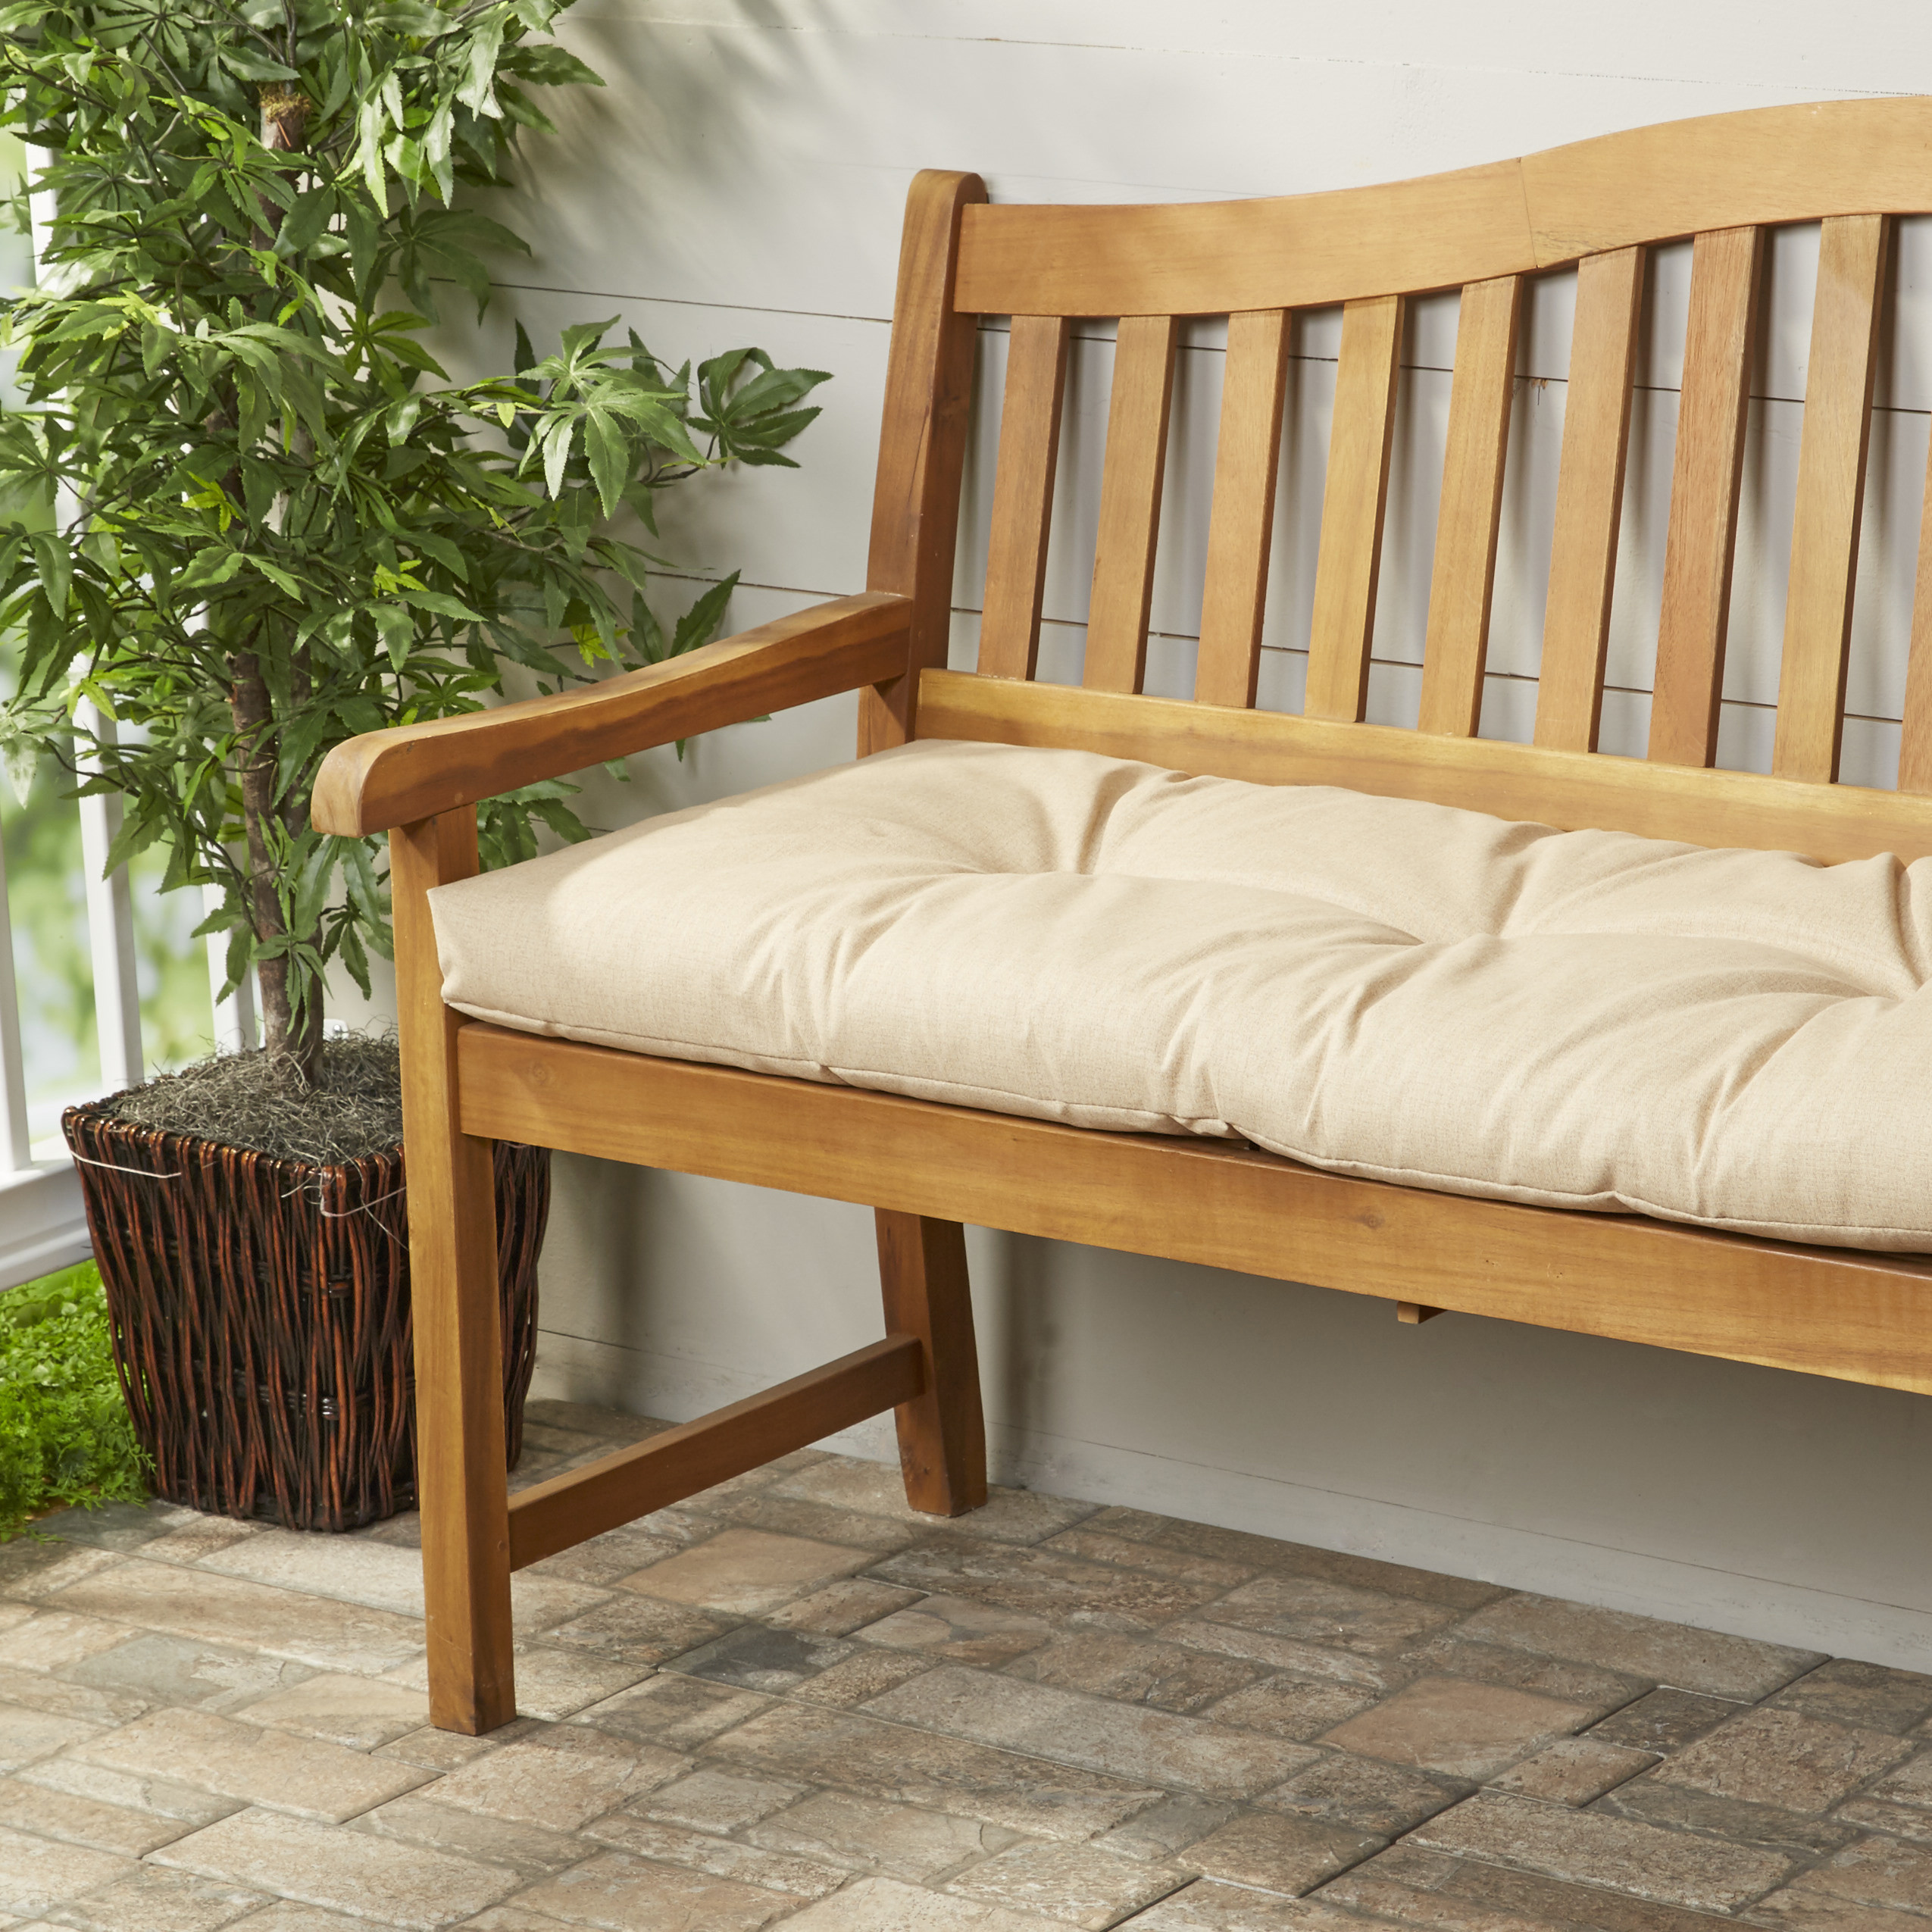 Best ideas about Patio Bench Cushions
. Save or Pin Wayfair Basics Wayfair Basics Outdoor Bench Cushion Now.